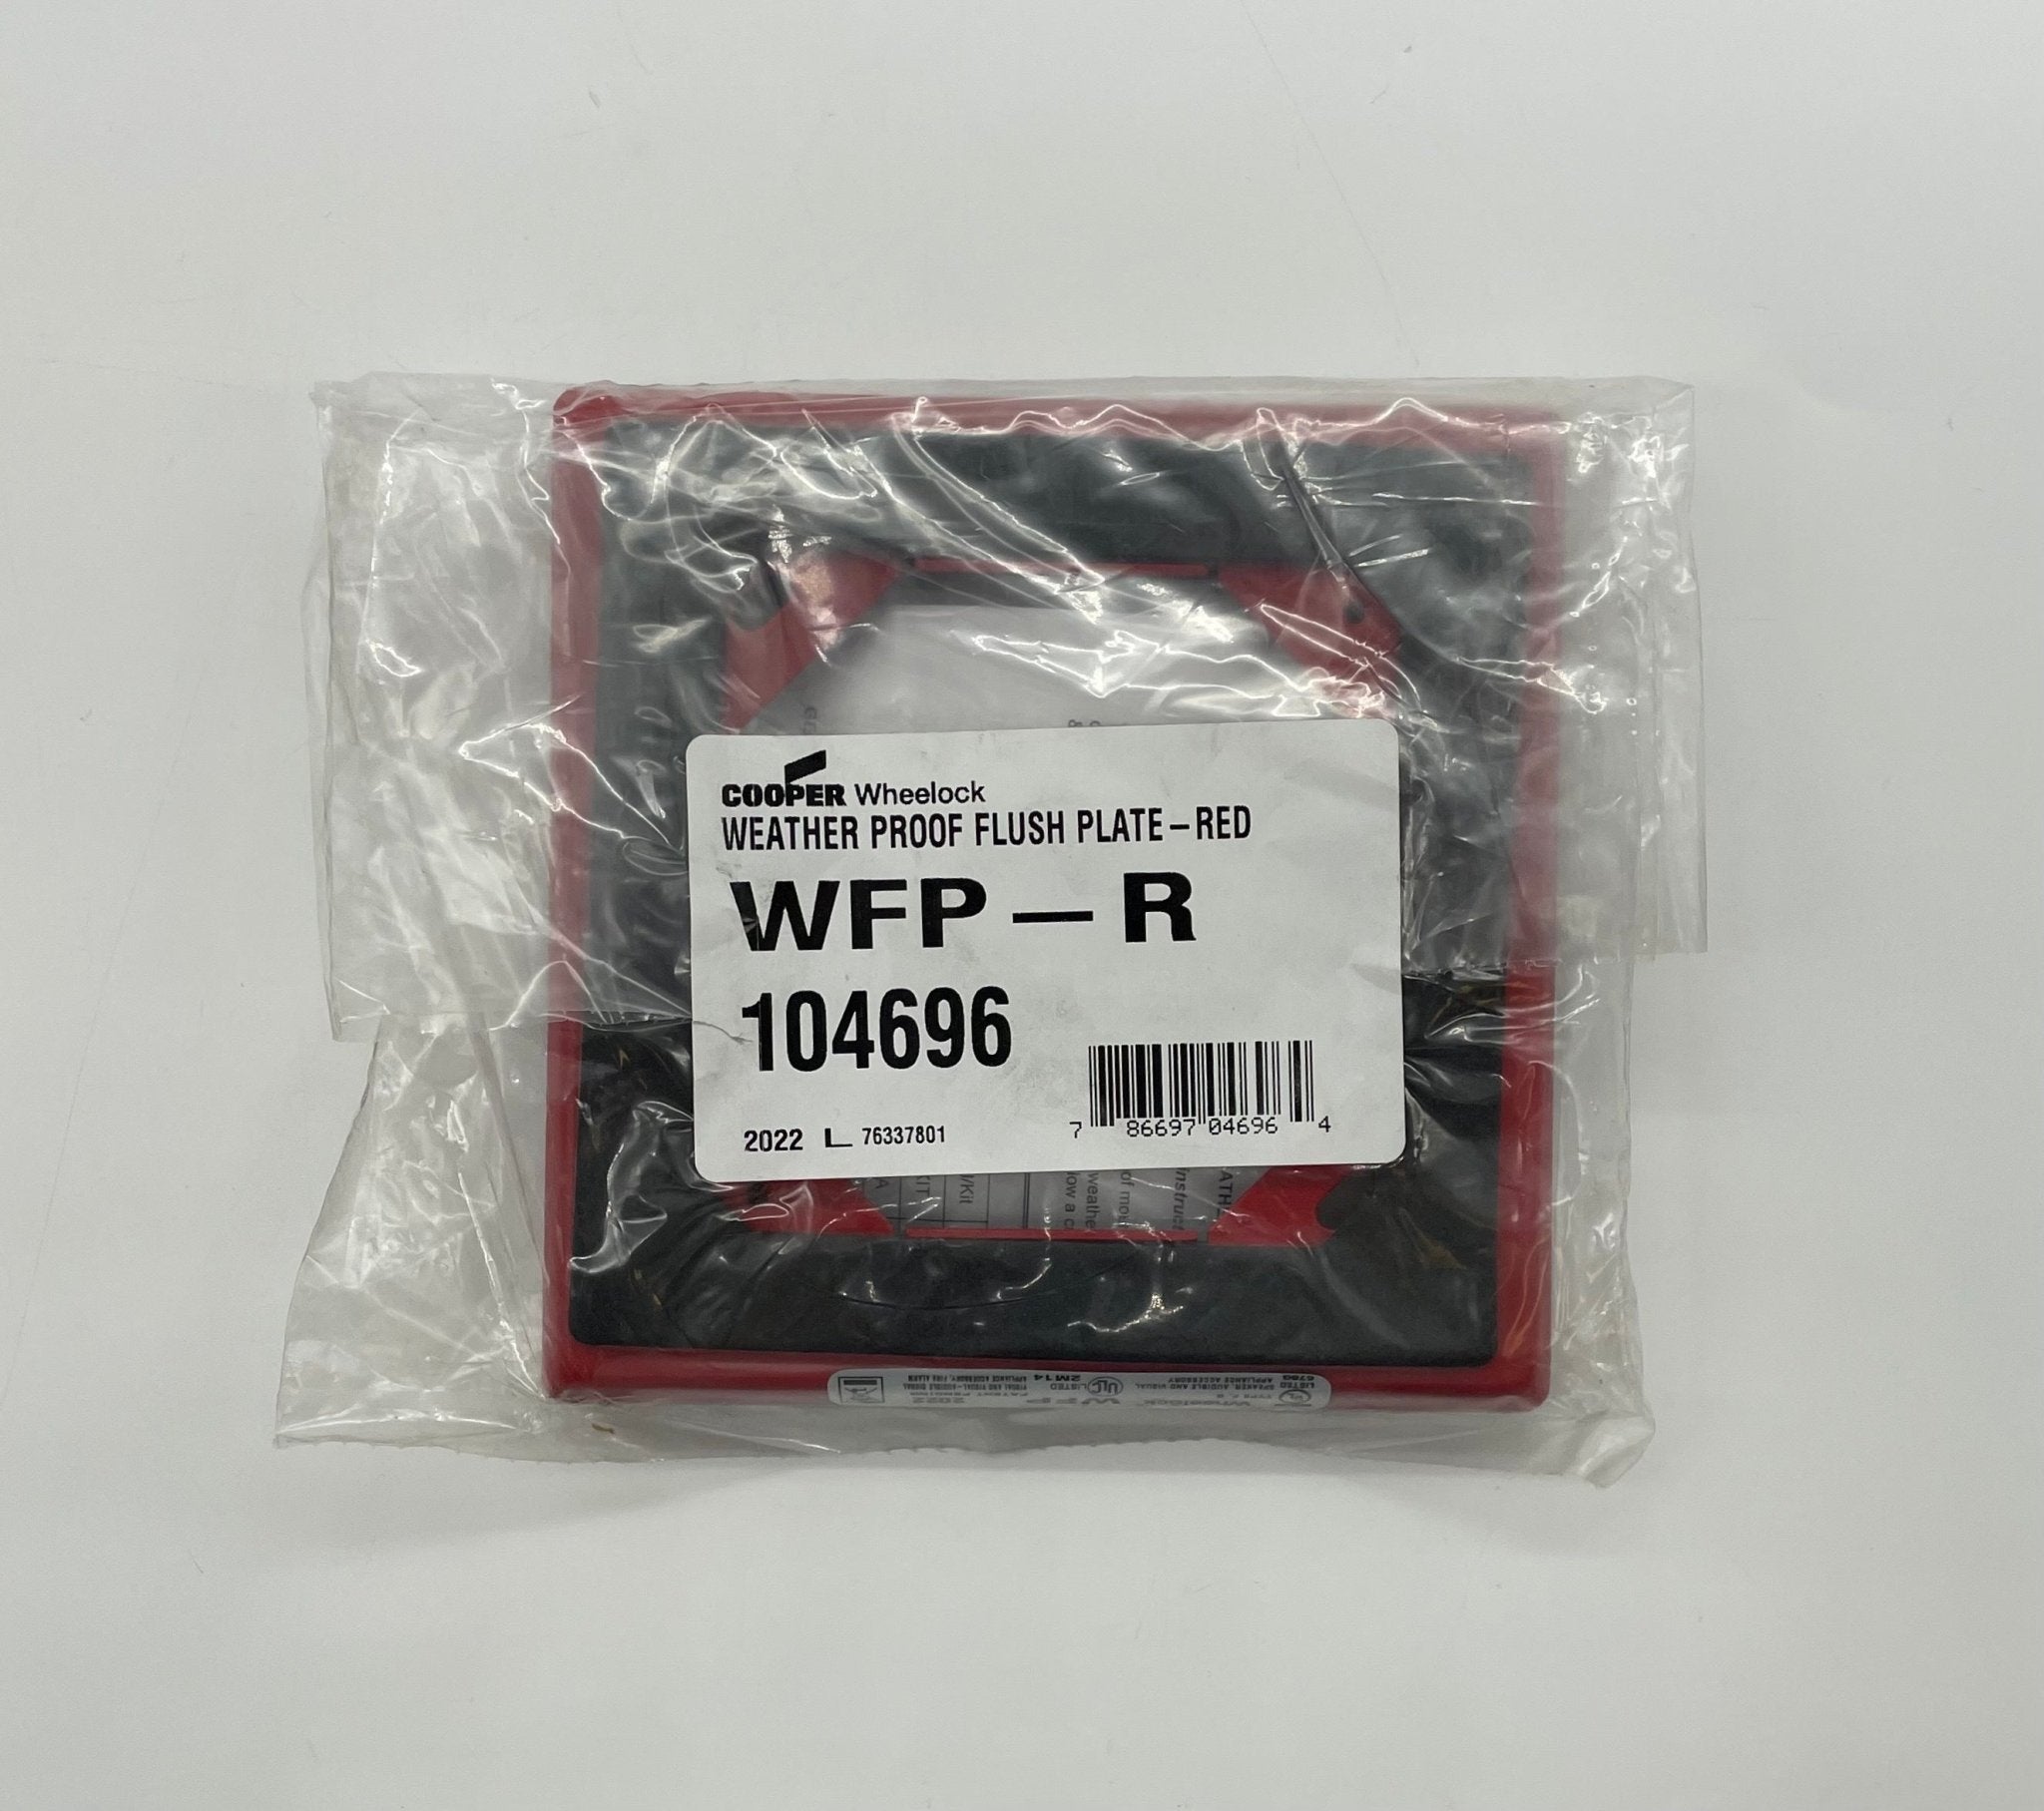 Wheelock WFP-R - The Fire Alarm Supplier